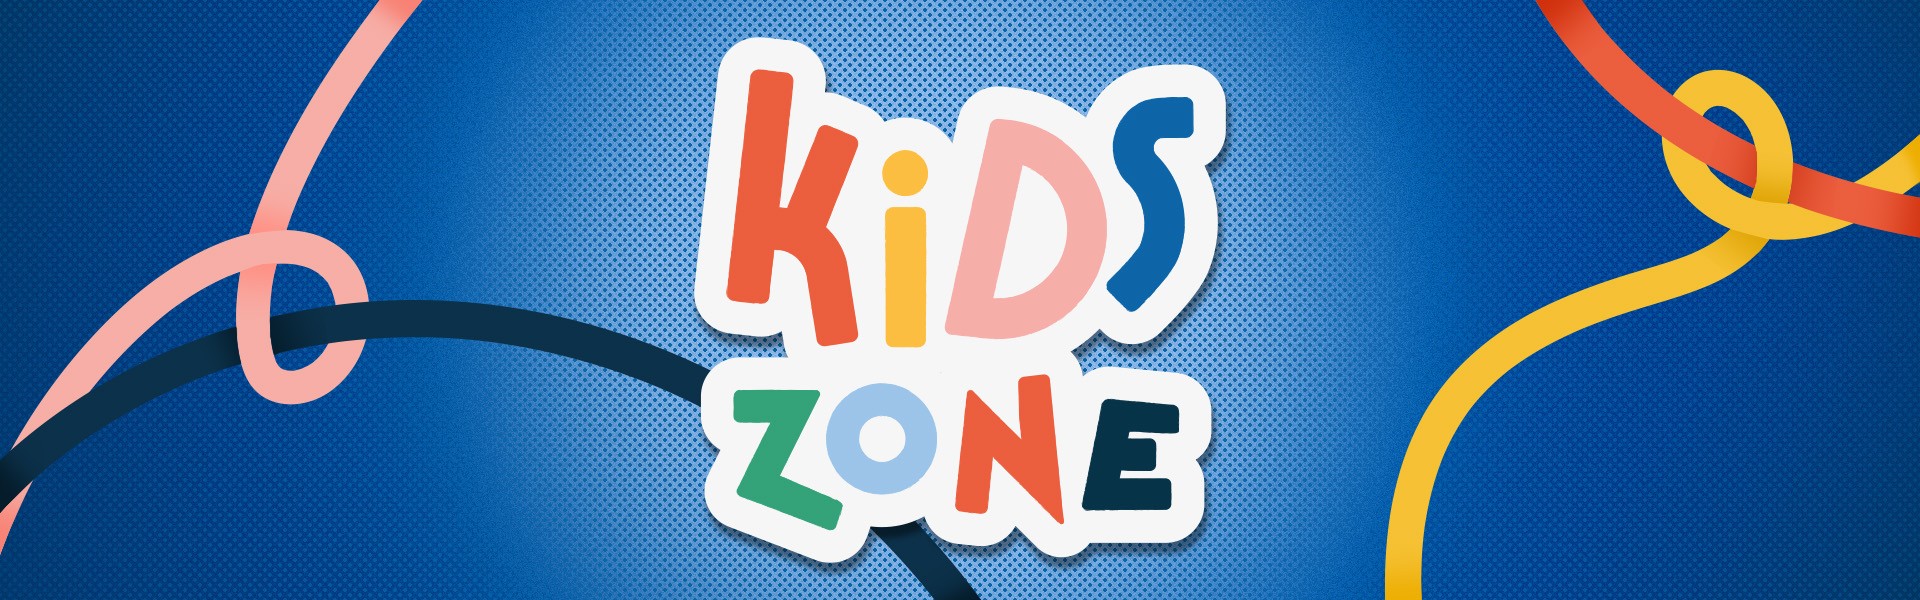 Banner de escritorio infantil - Kids Zone